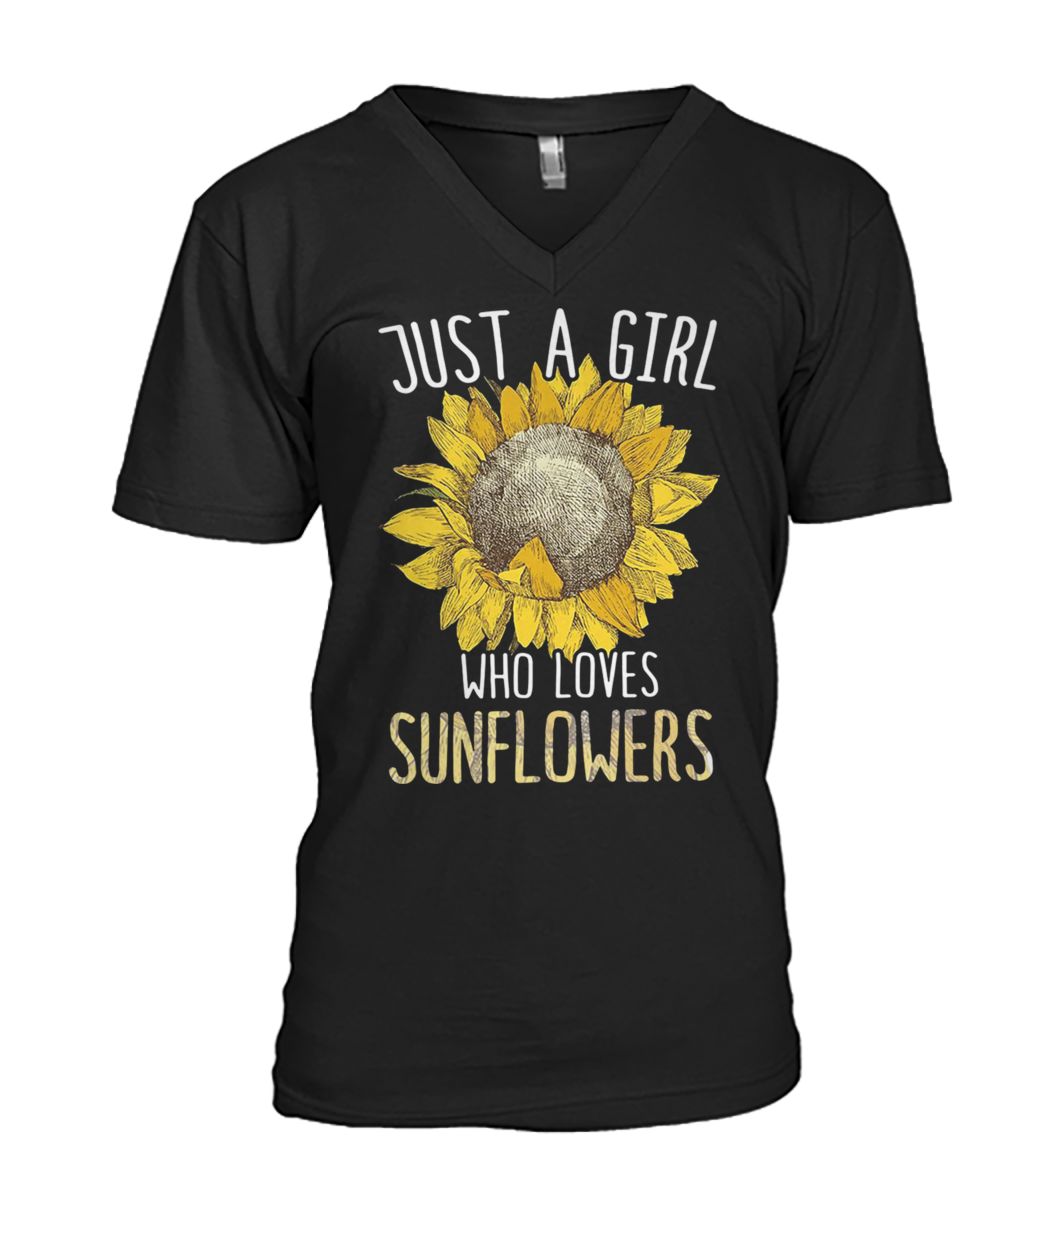 Just a girl who loves sunflowers mens v-neck